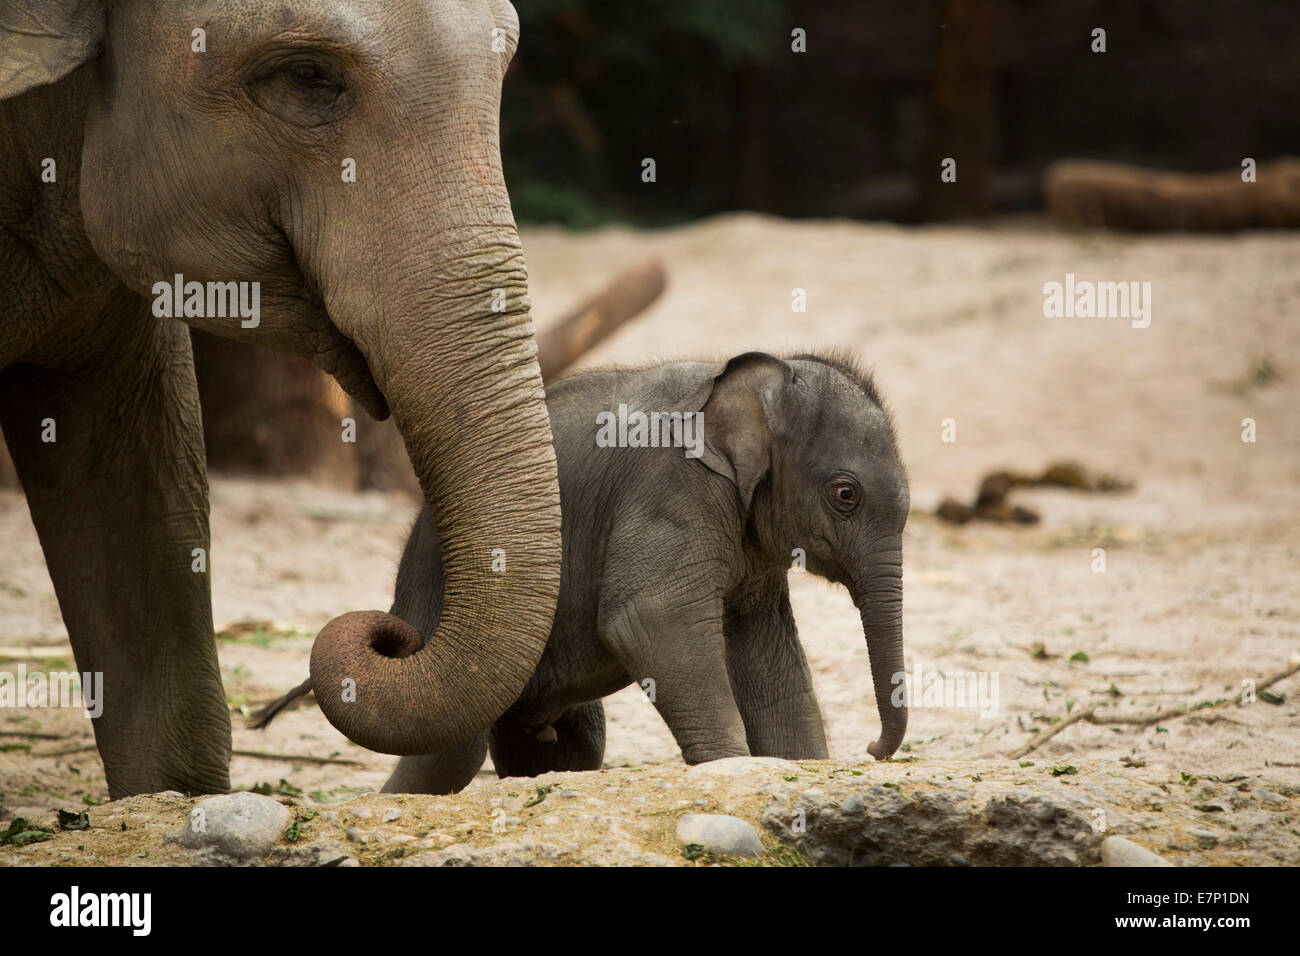 Animals, elephants, young, elephant, zoo Zurich, animals, animal, canton Zurich, zoo, Switzerland, Europe, Stock Photo